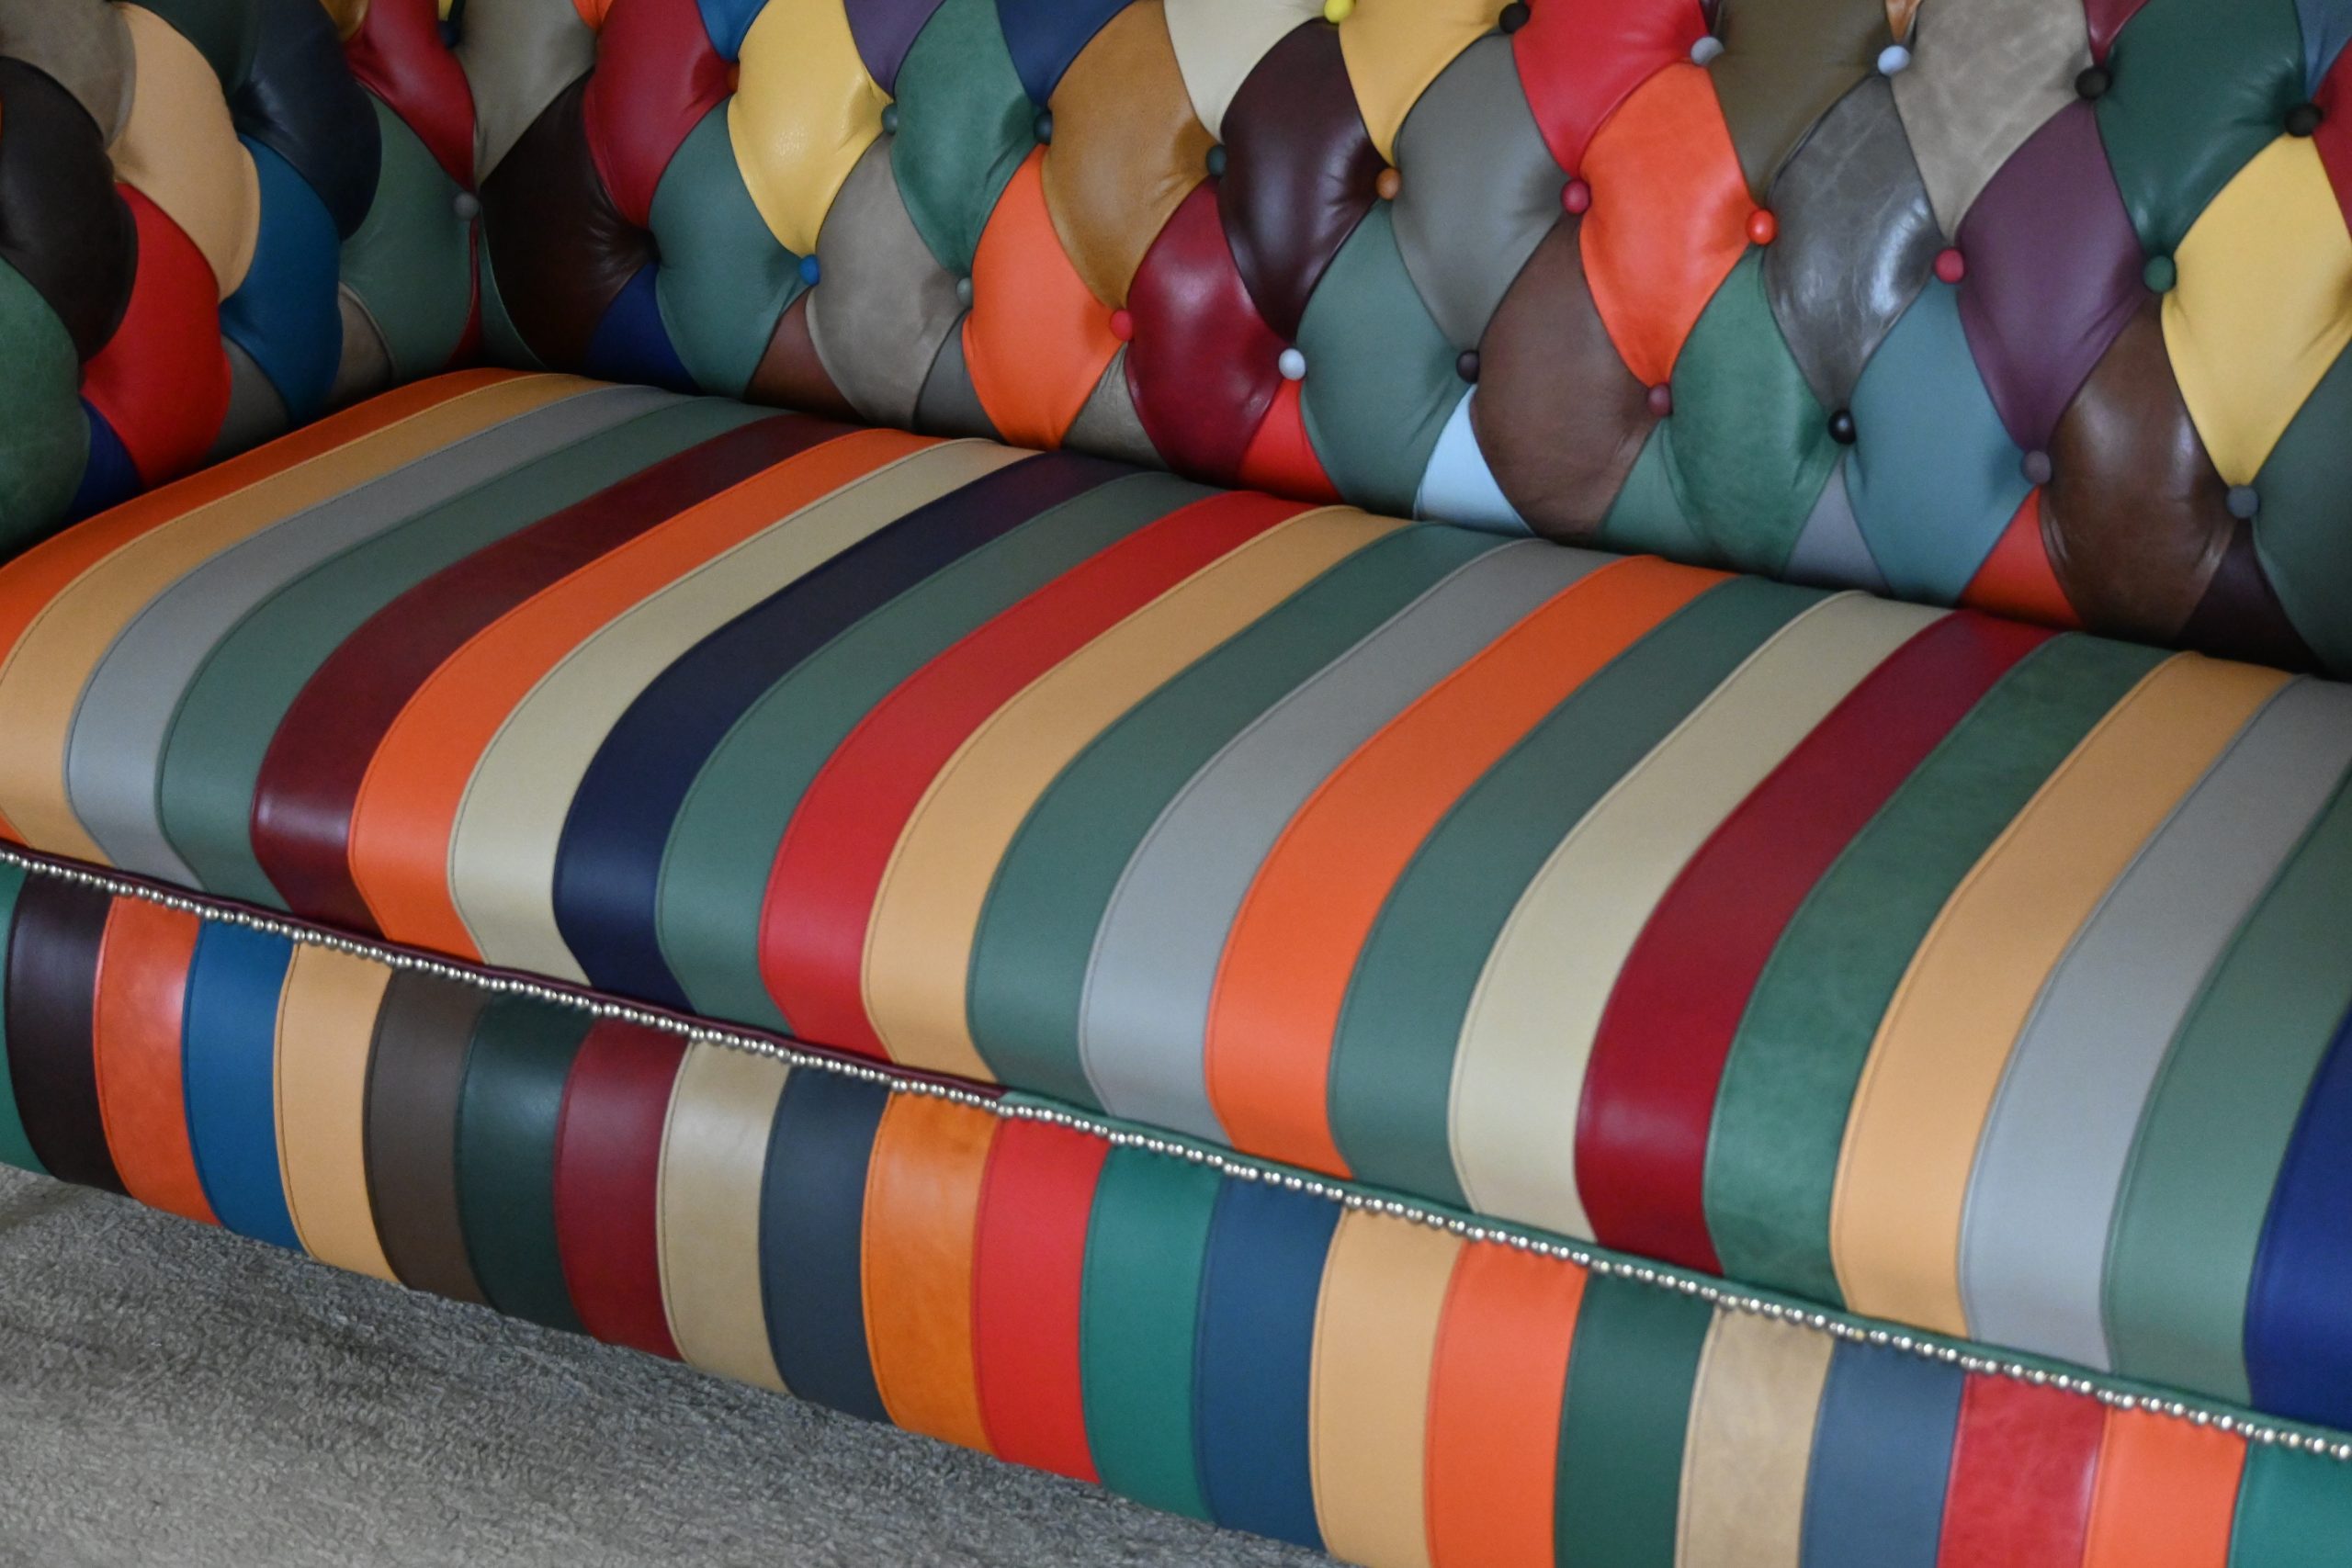 toonkamermodel multicolor stripe chesterfield bank